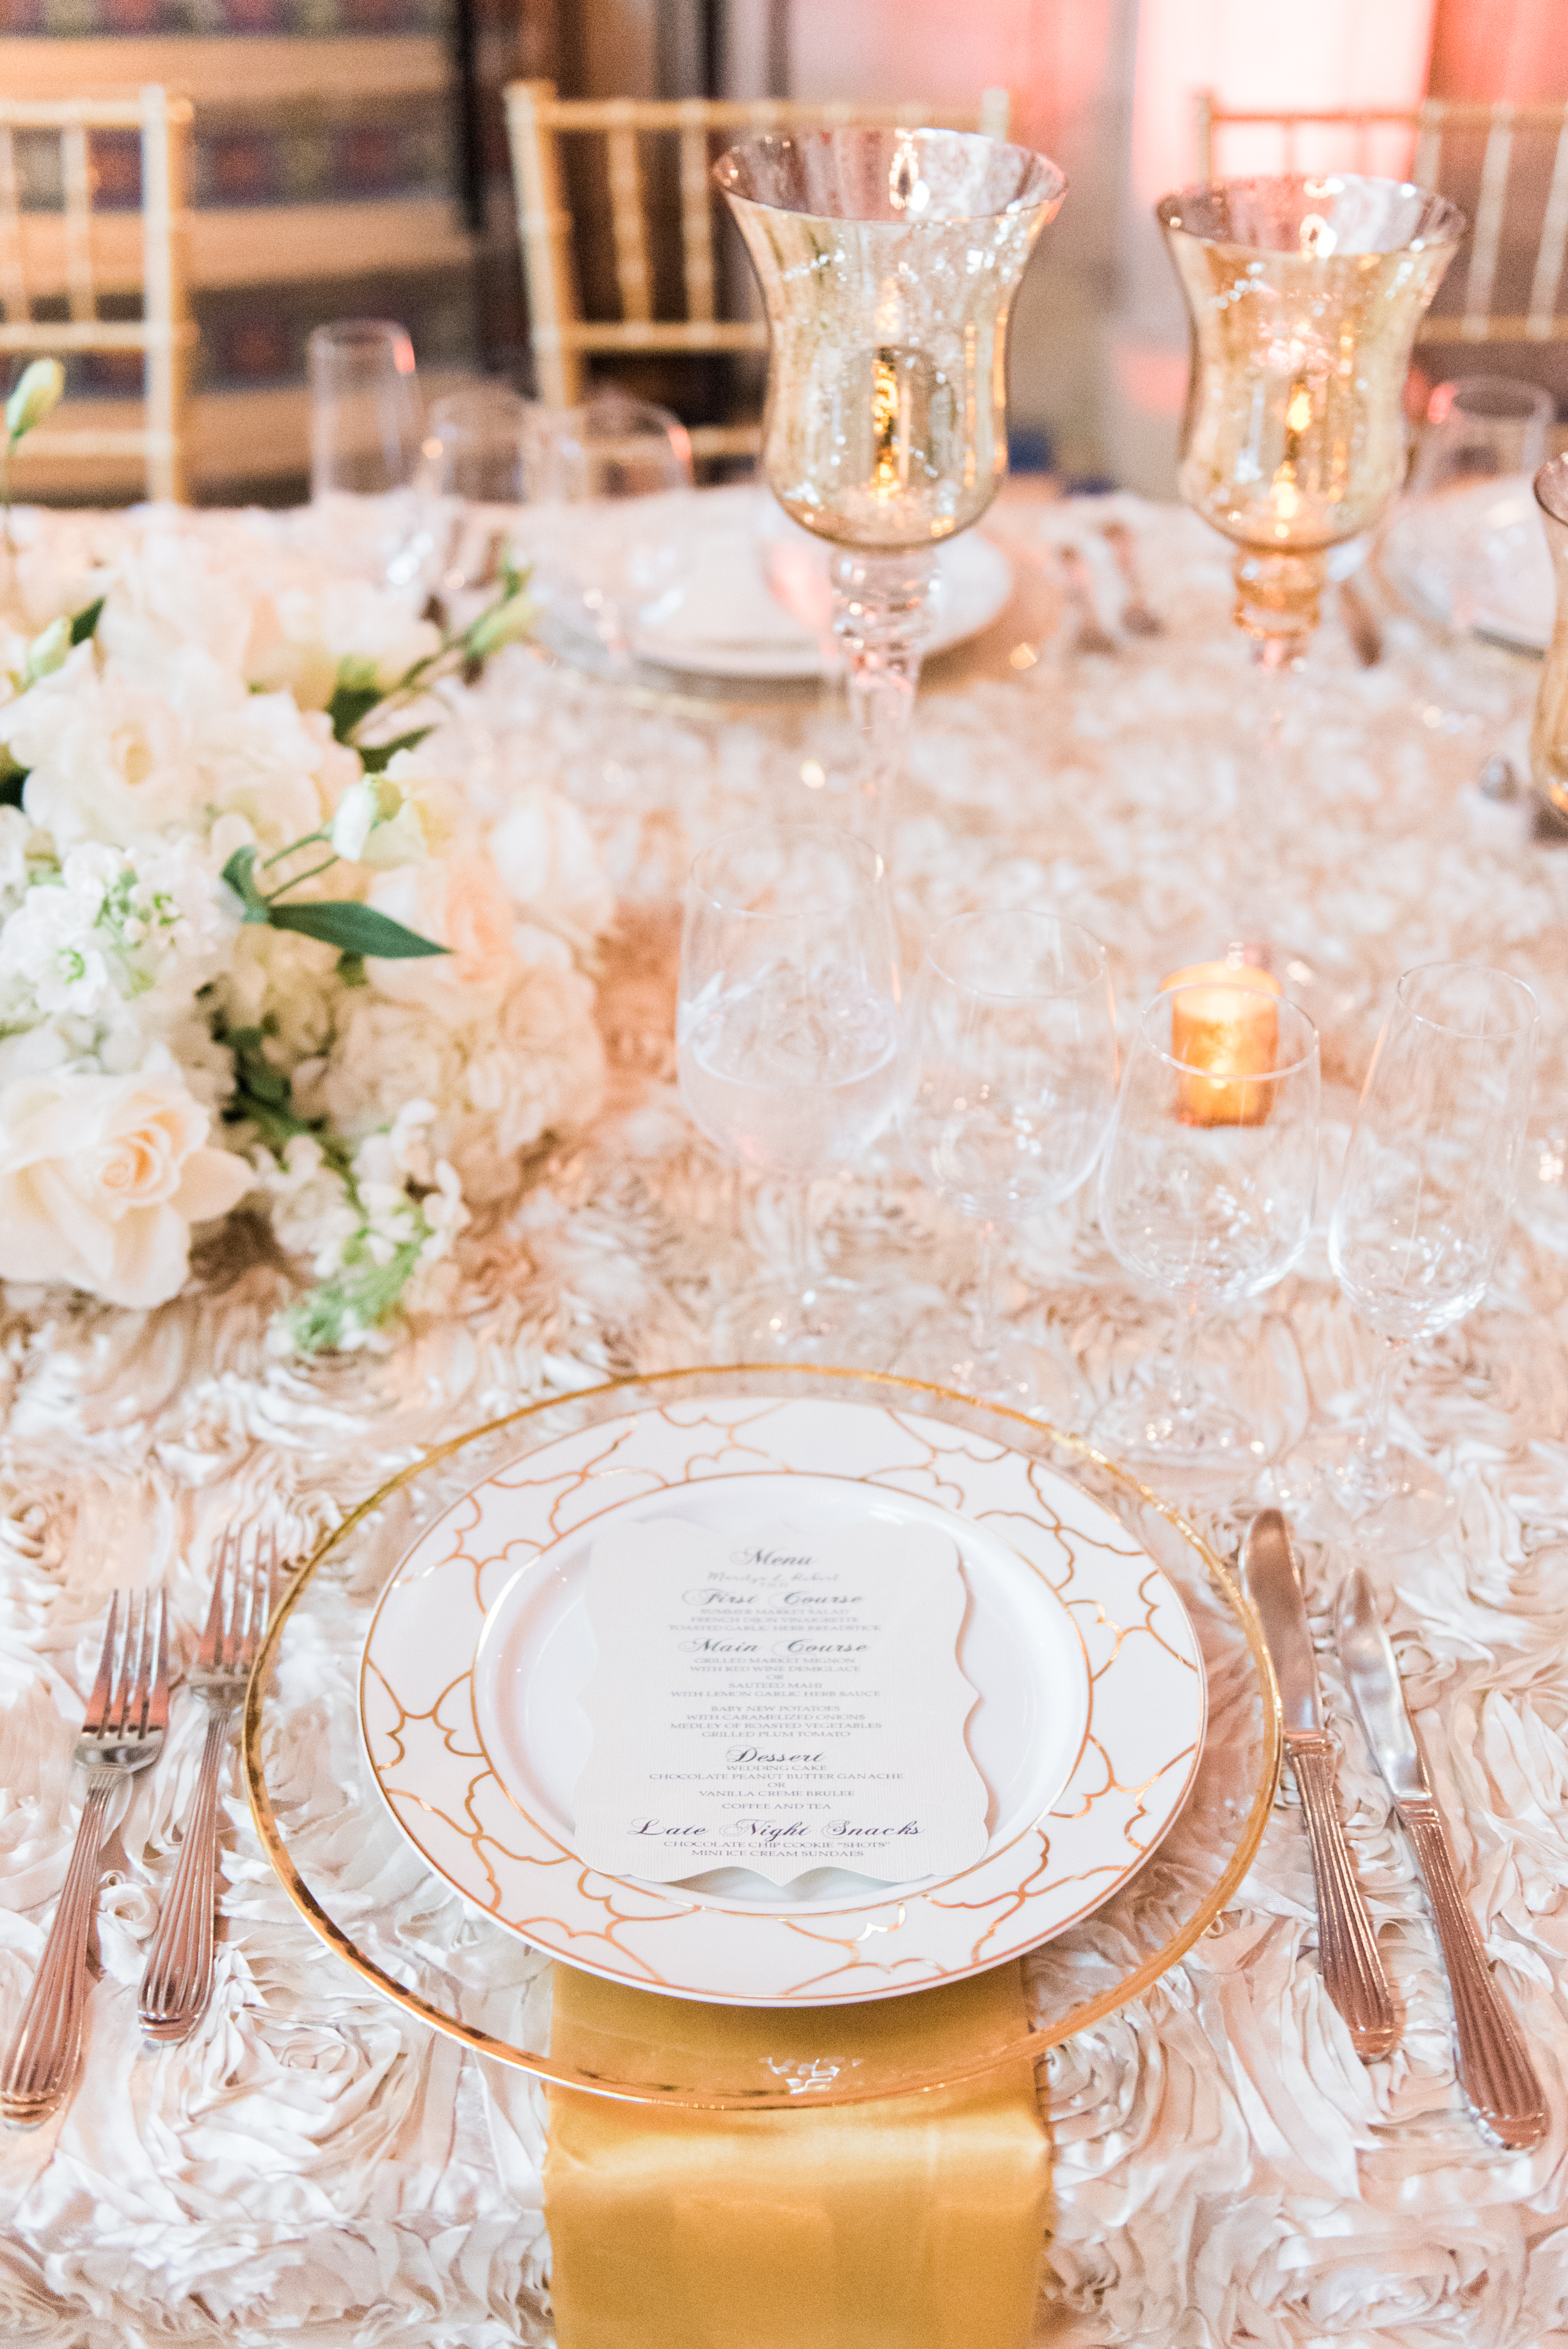 Gold and White Wedding - Flagler Museum Palm Beach Wedding Reception - The Overwhelmed Bride Wedding Blog